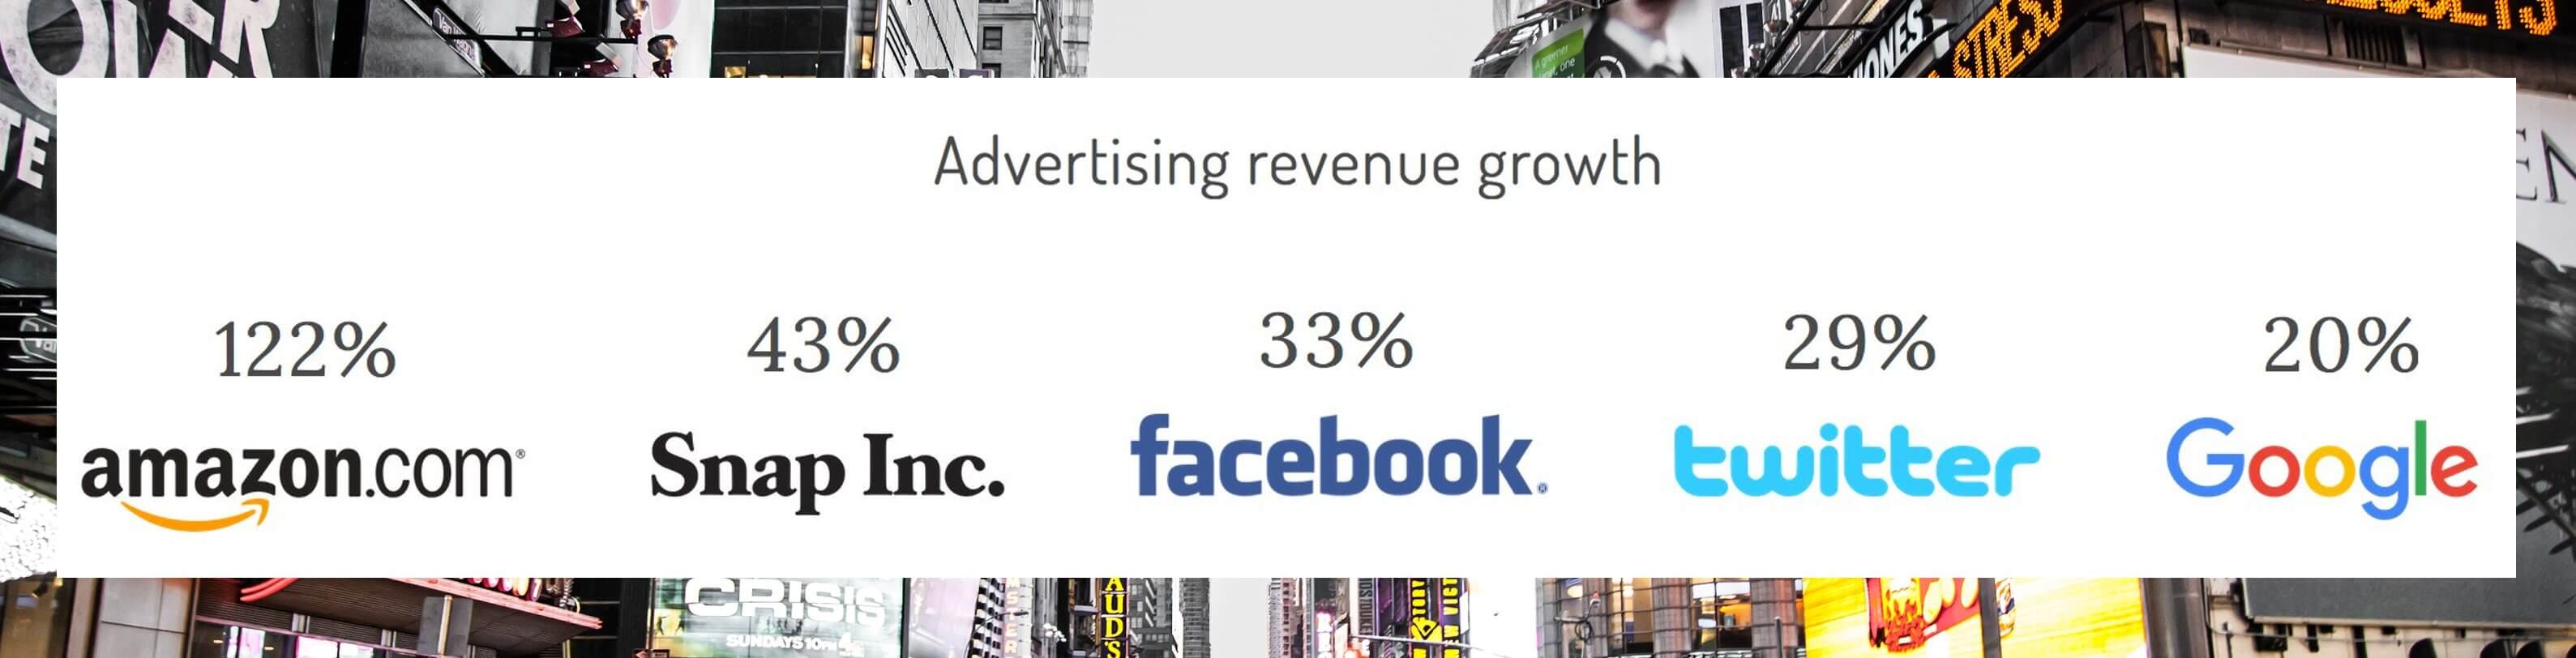 Advertising revenue growth